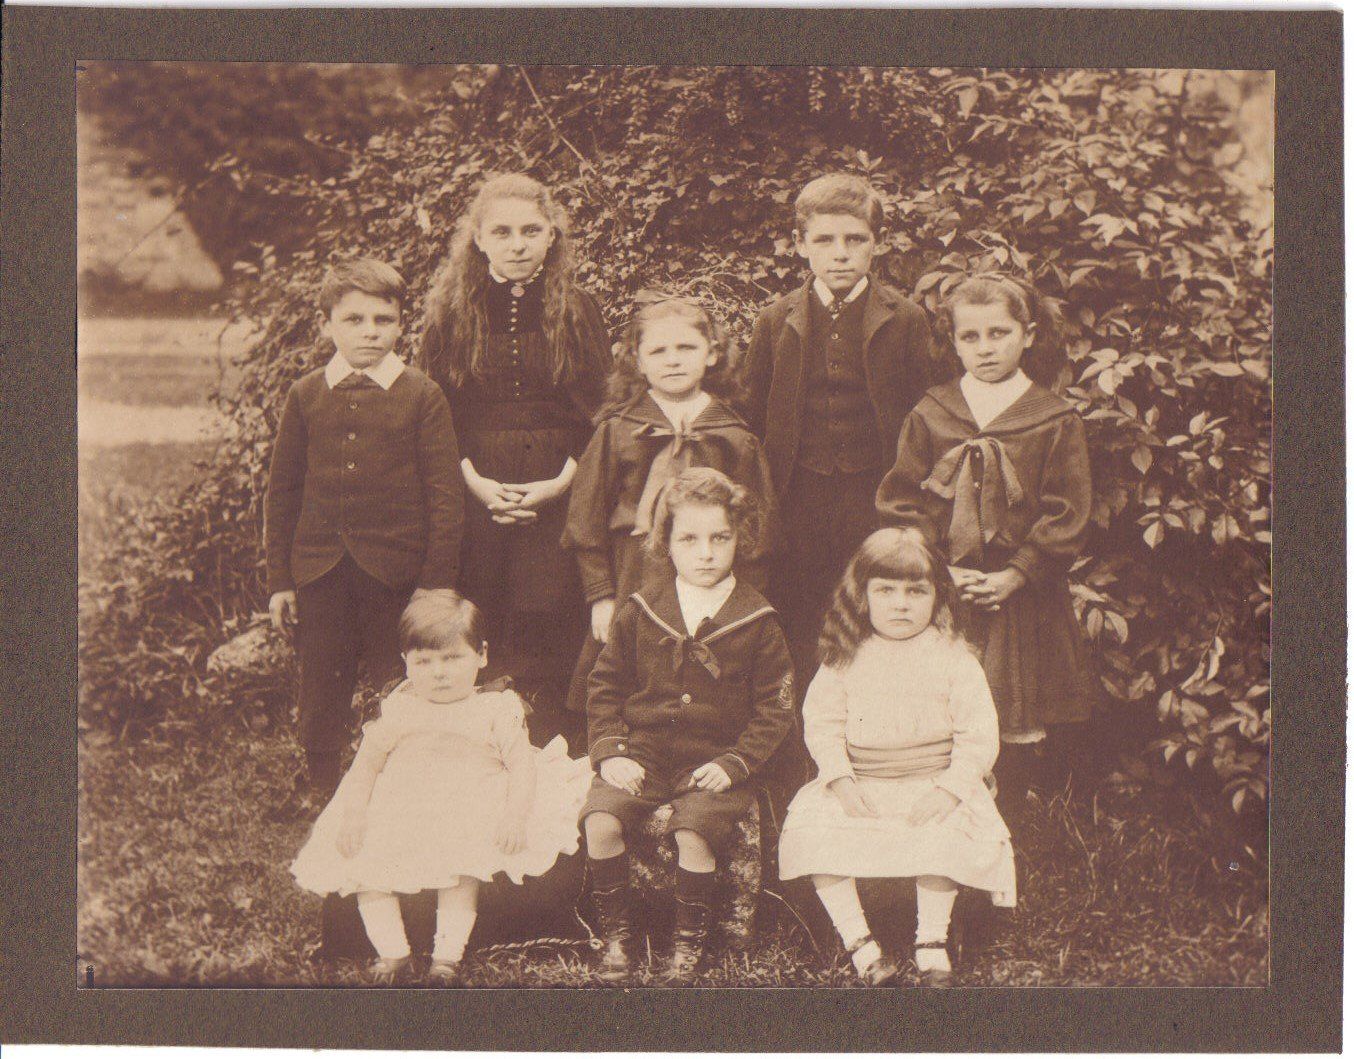 Clatworthy Children in ca 1894